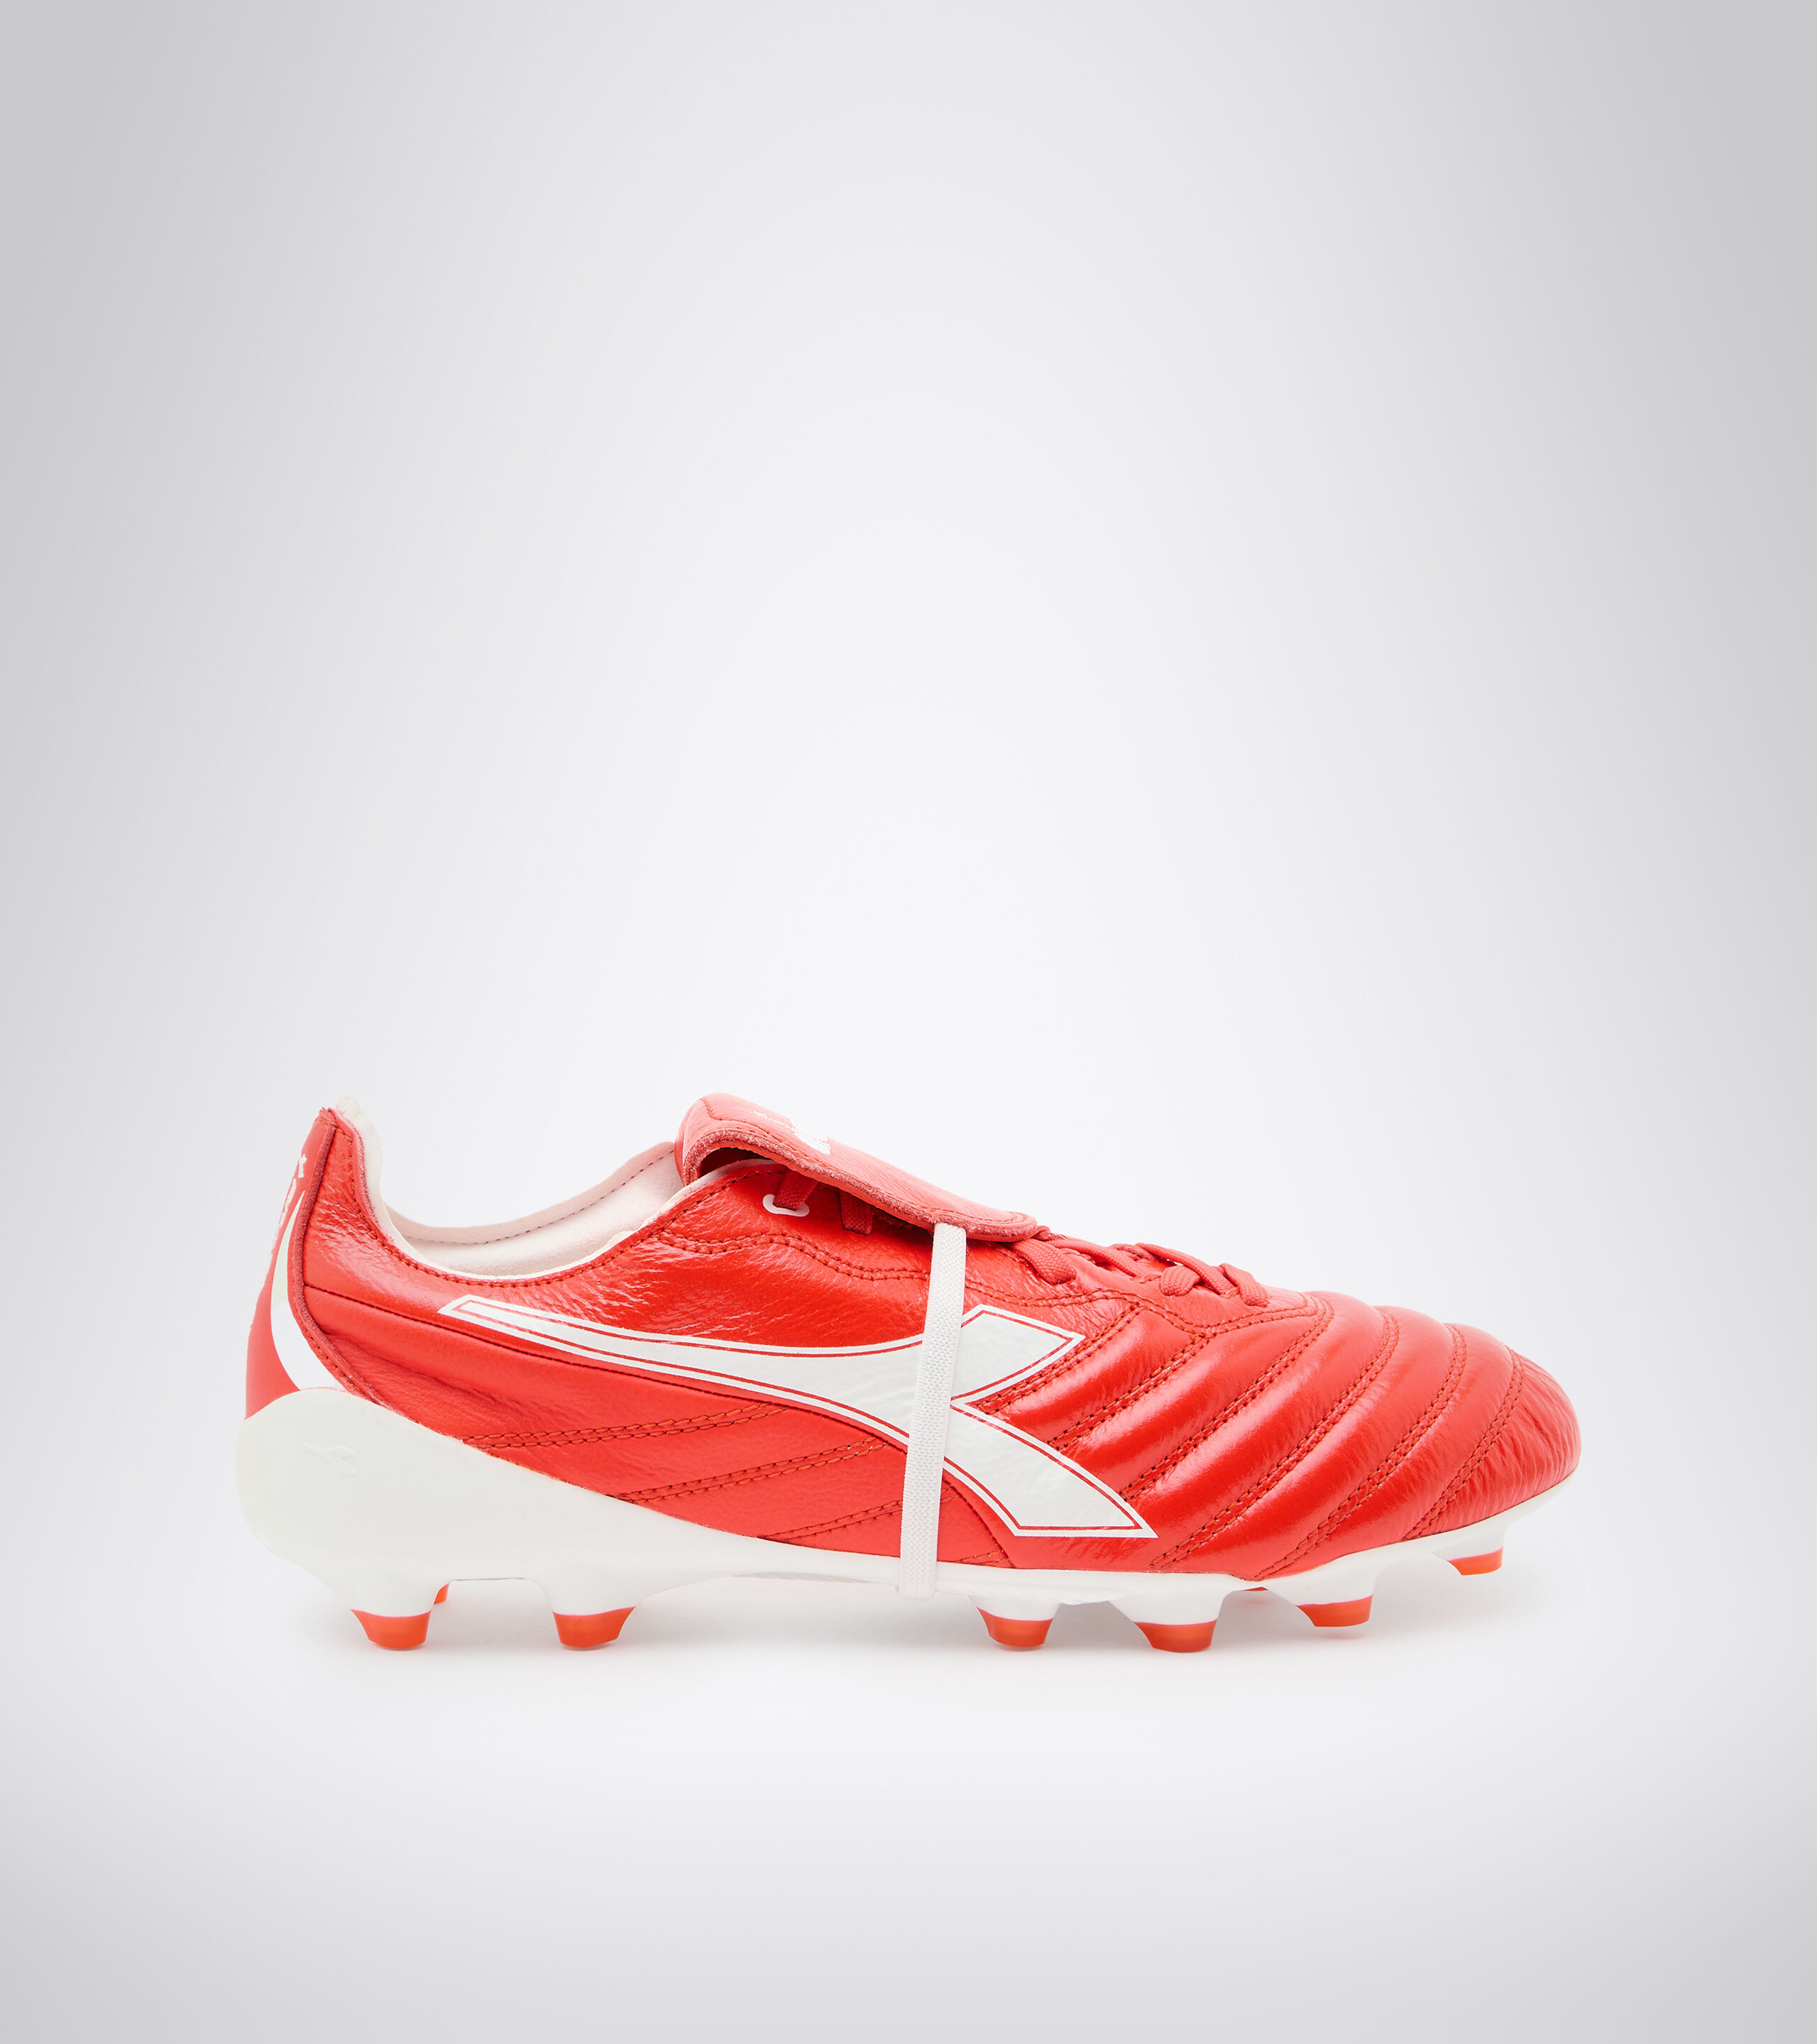 asics football boots size 15